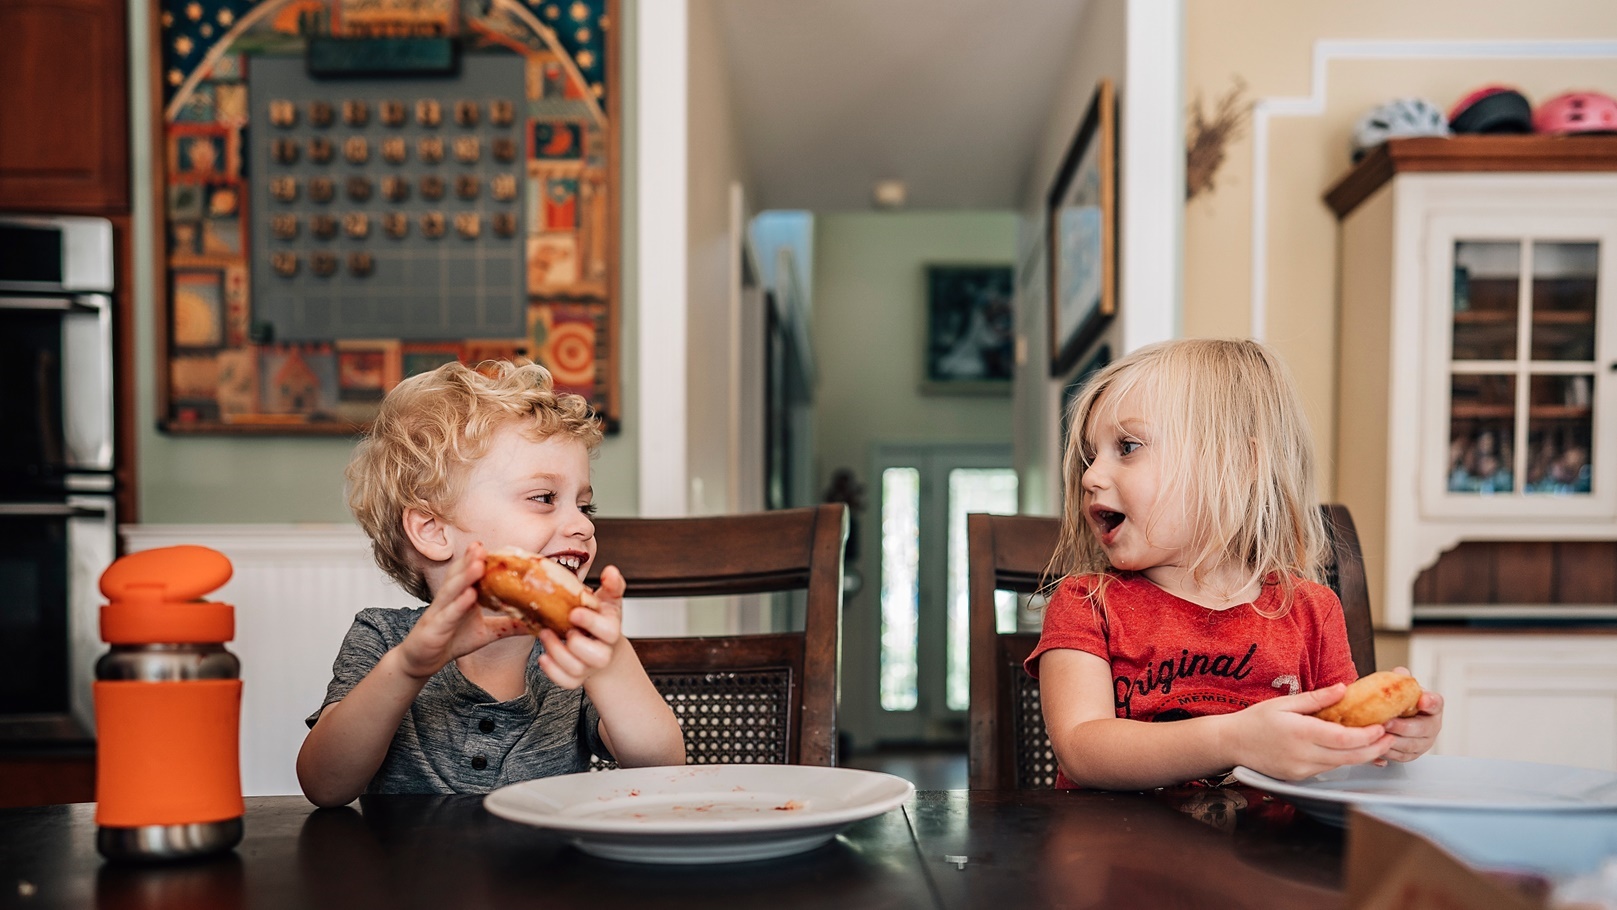 child-eating-at-home-2021-10-29-20-25-41-utc